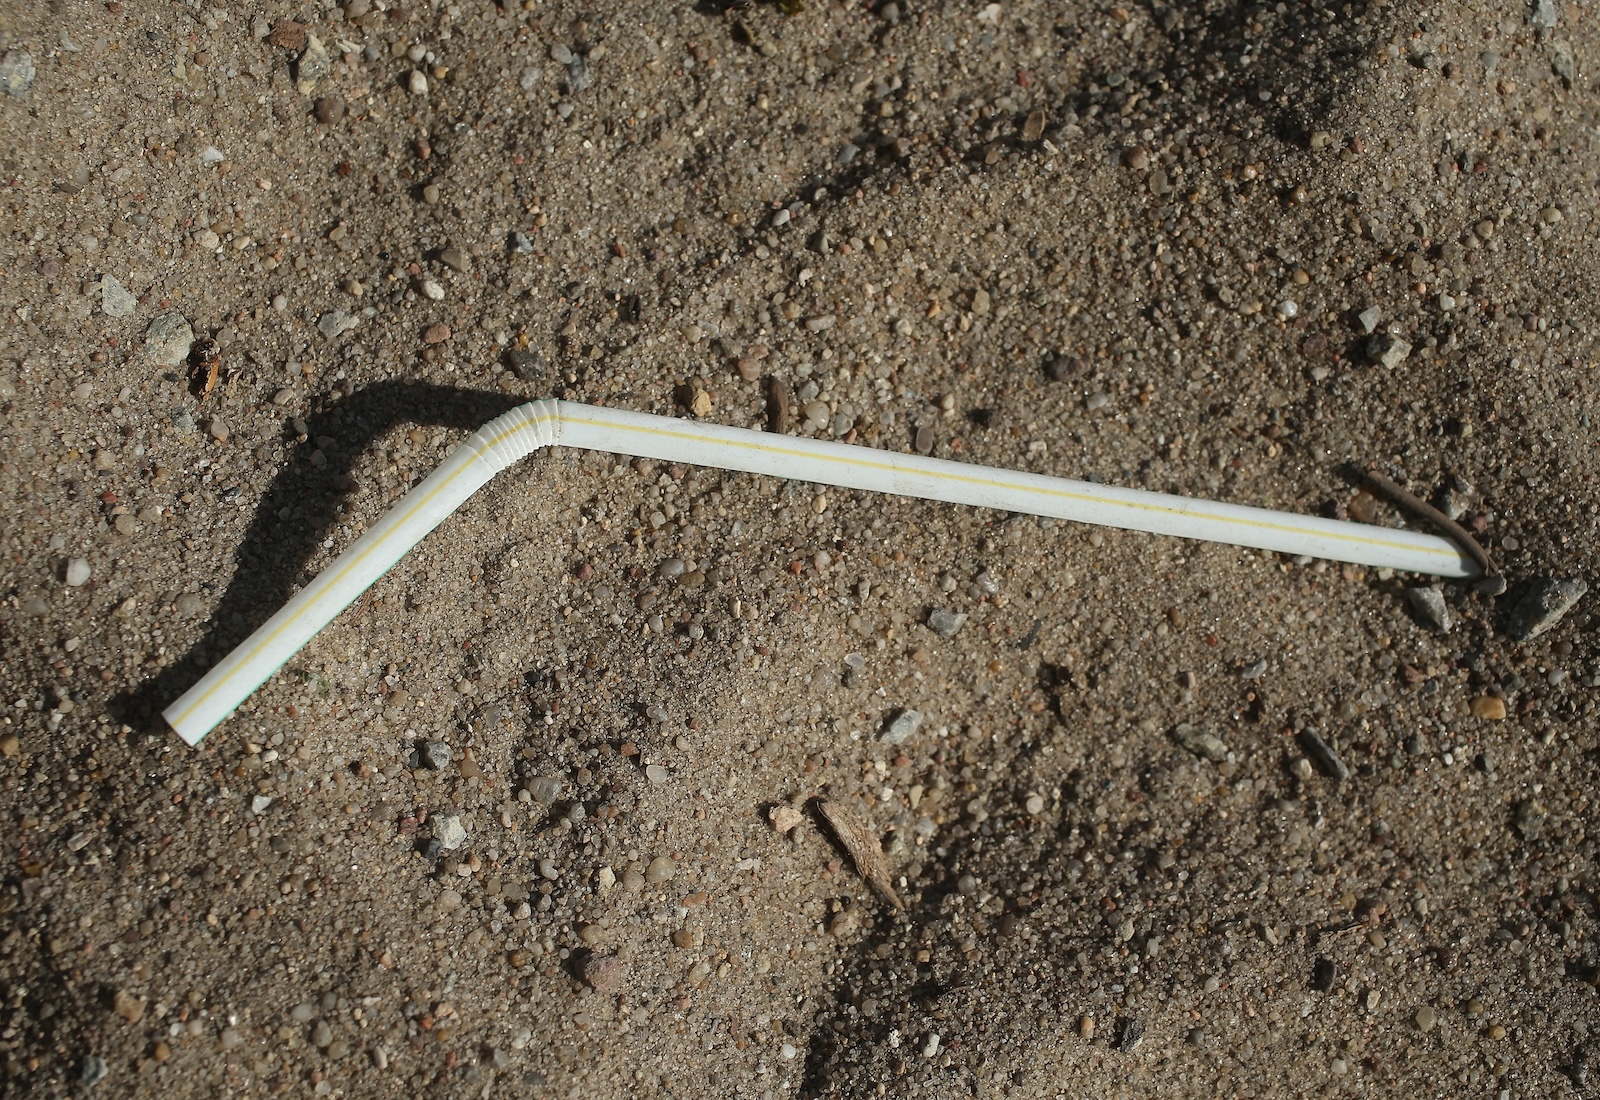 Plastic straw lying flat on dirt